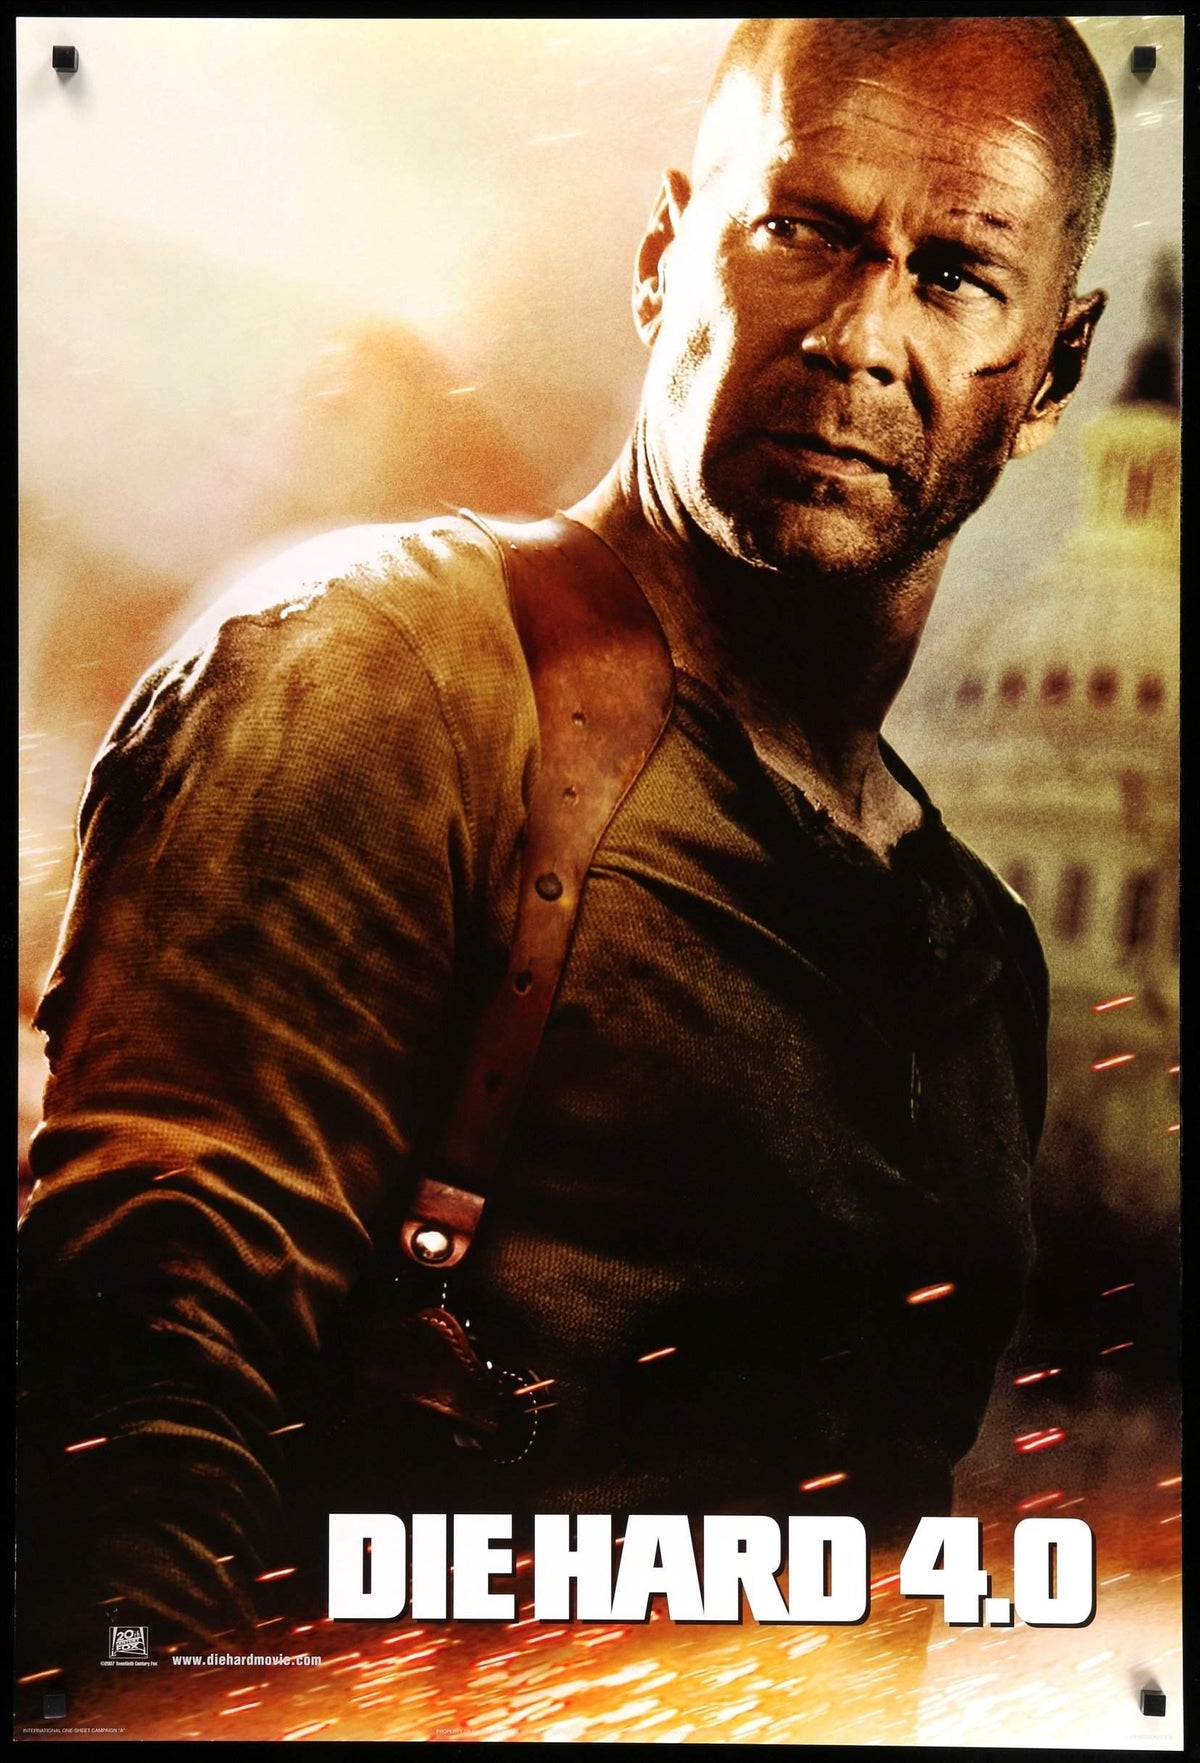 Live Free or Die Hard (2007) original movie poster for sale at Original Film Art